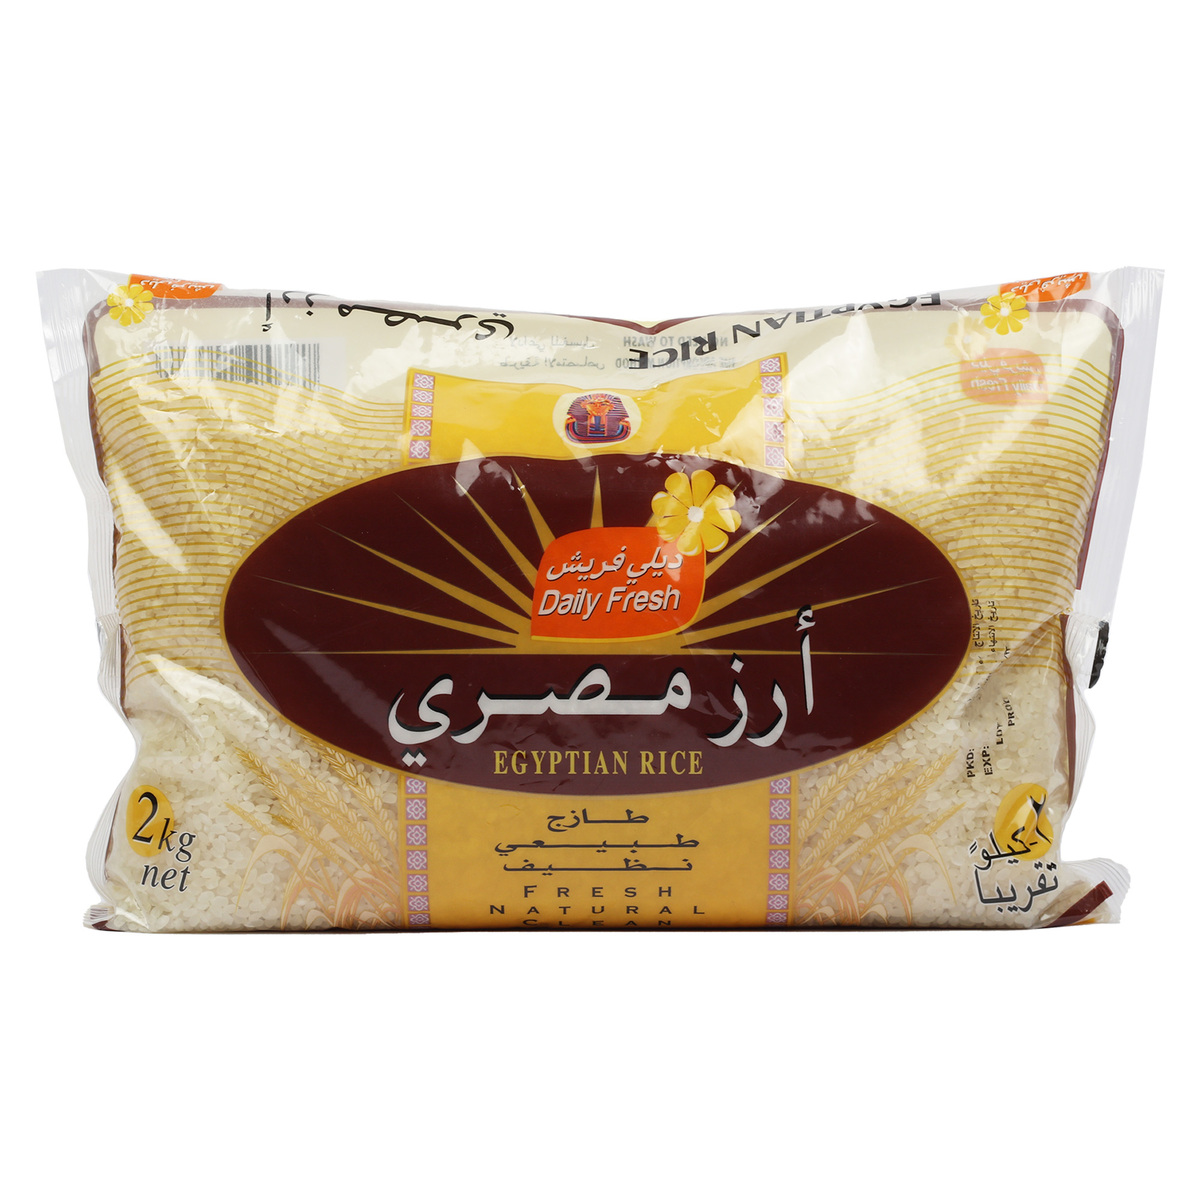 Daily Fresh Egyptian Rice 2 kg